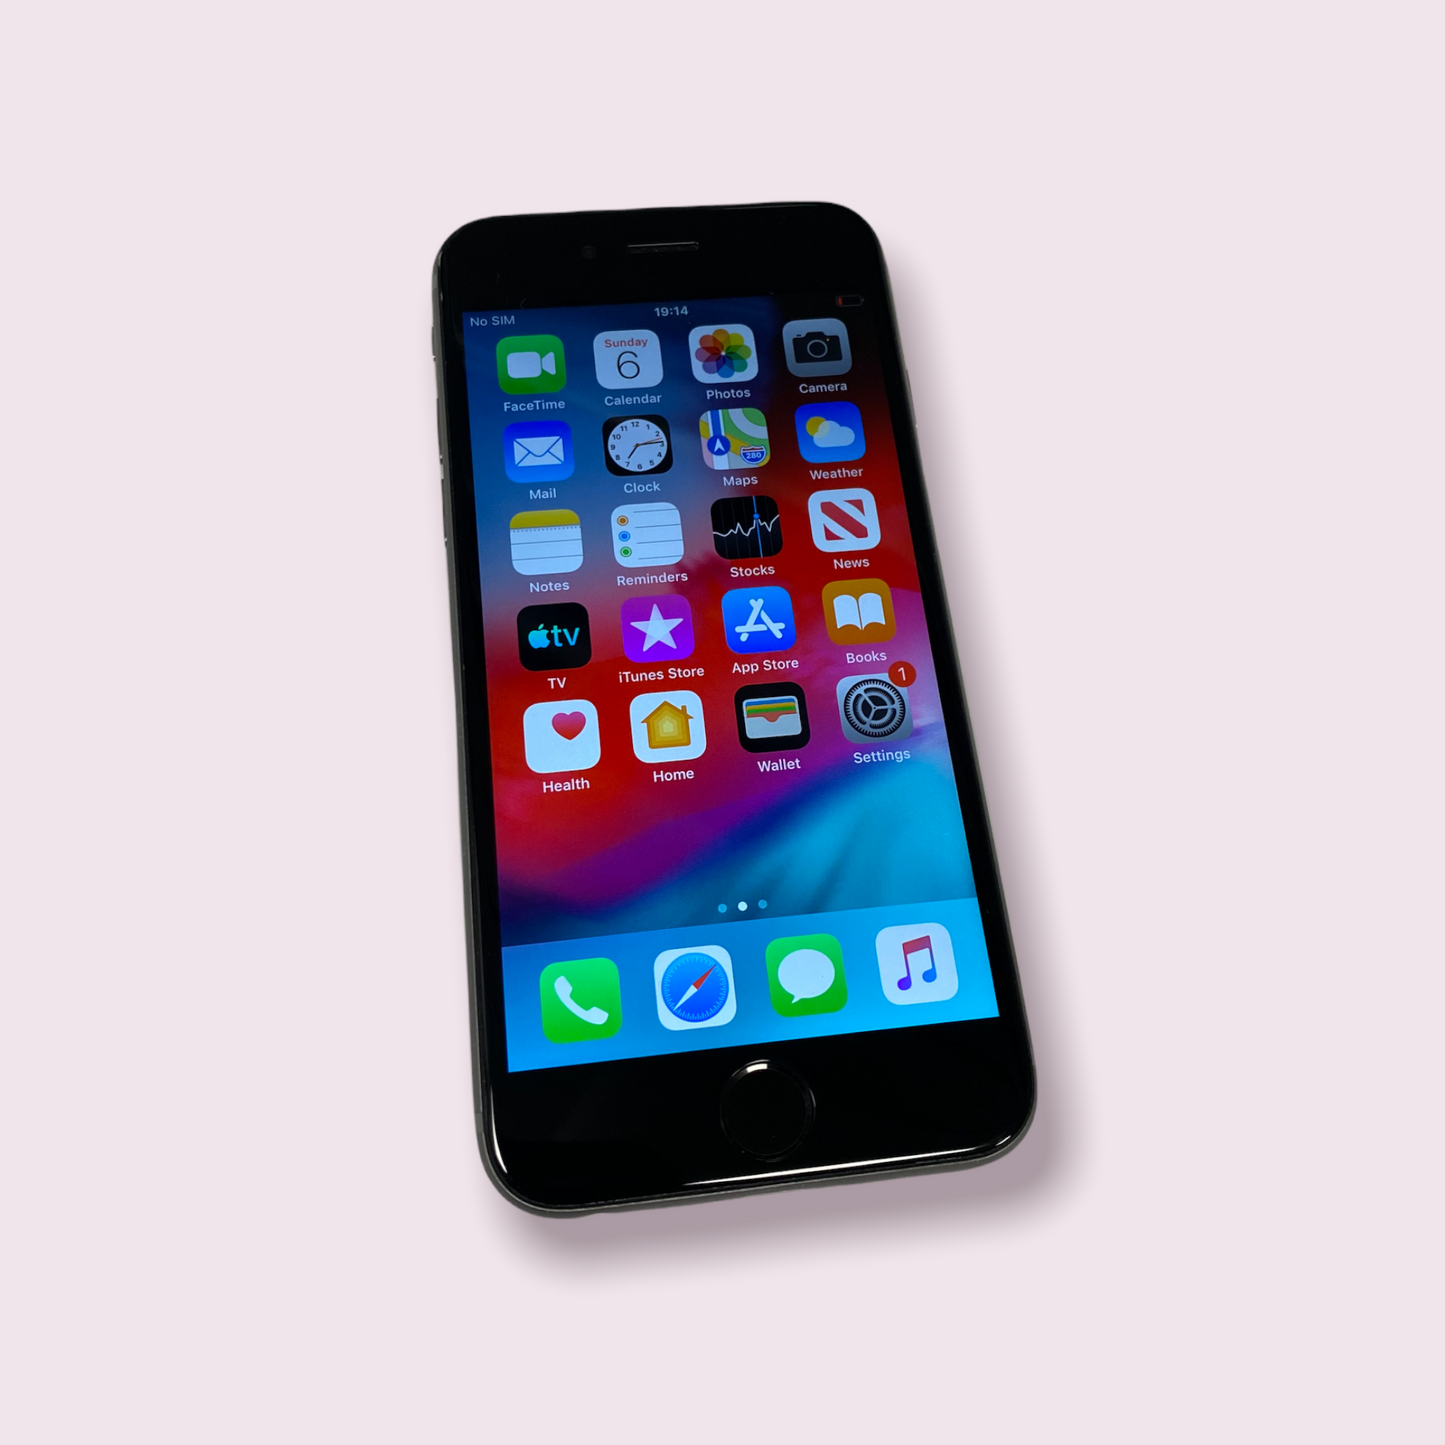 Apple iPhone 6 32GB Space Grey Unlocked - Grade B